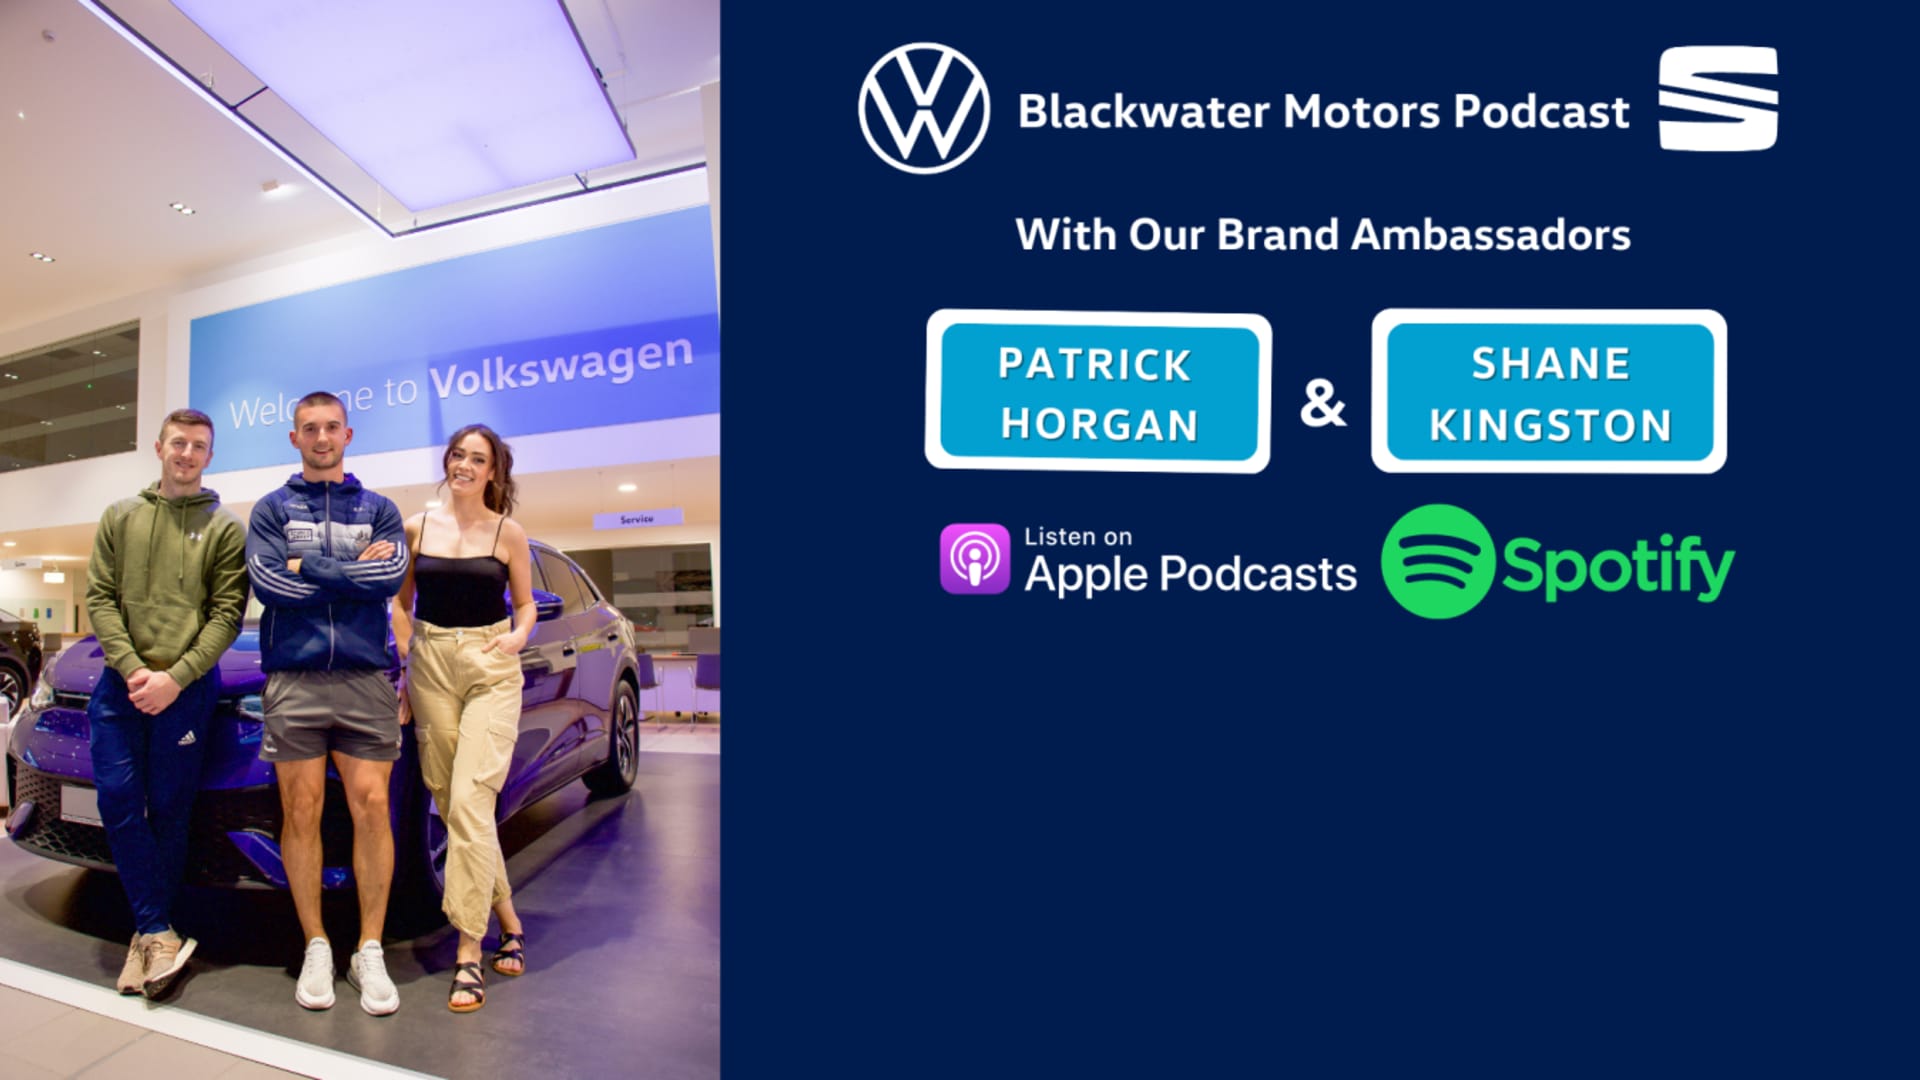 The Blackwater Motors Podcast